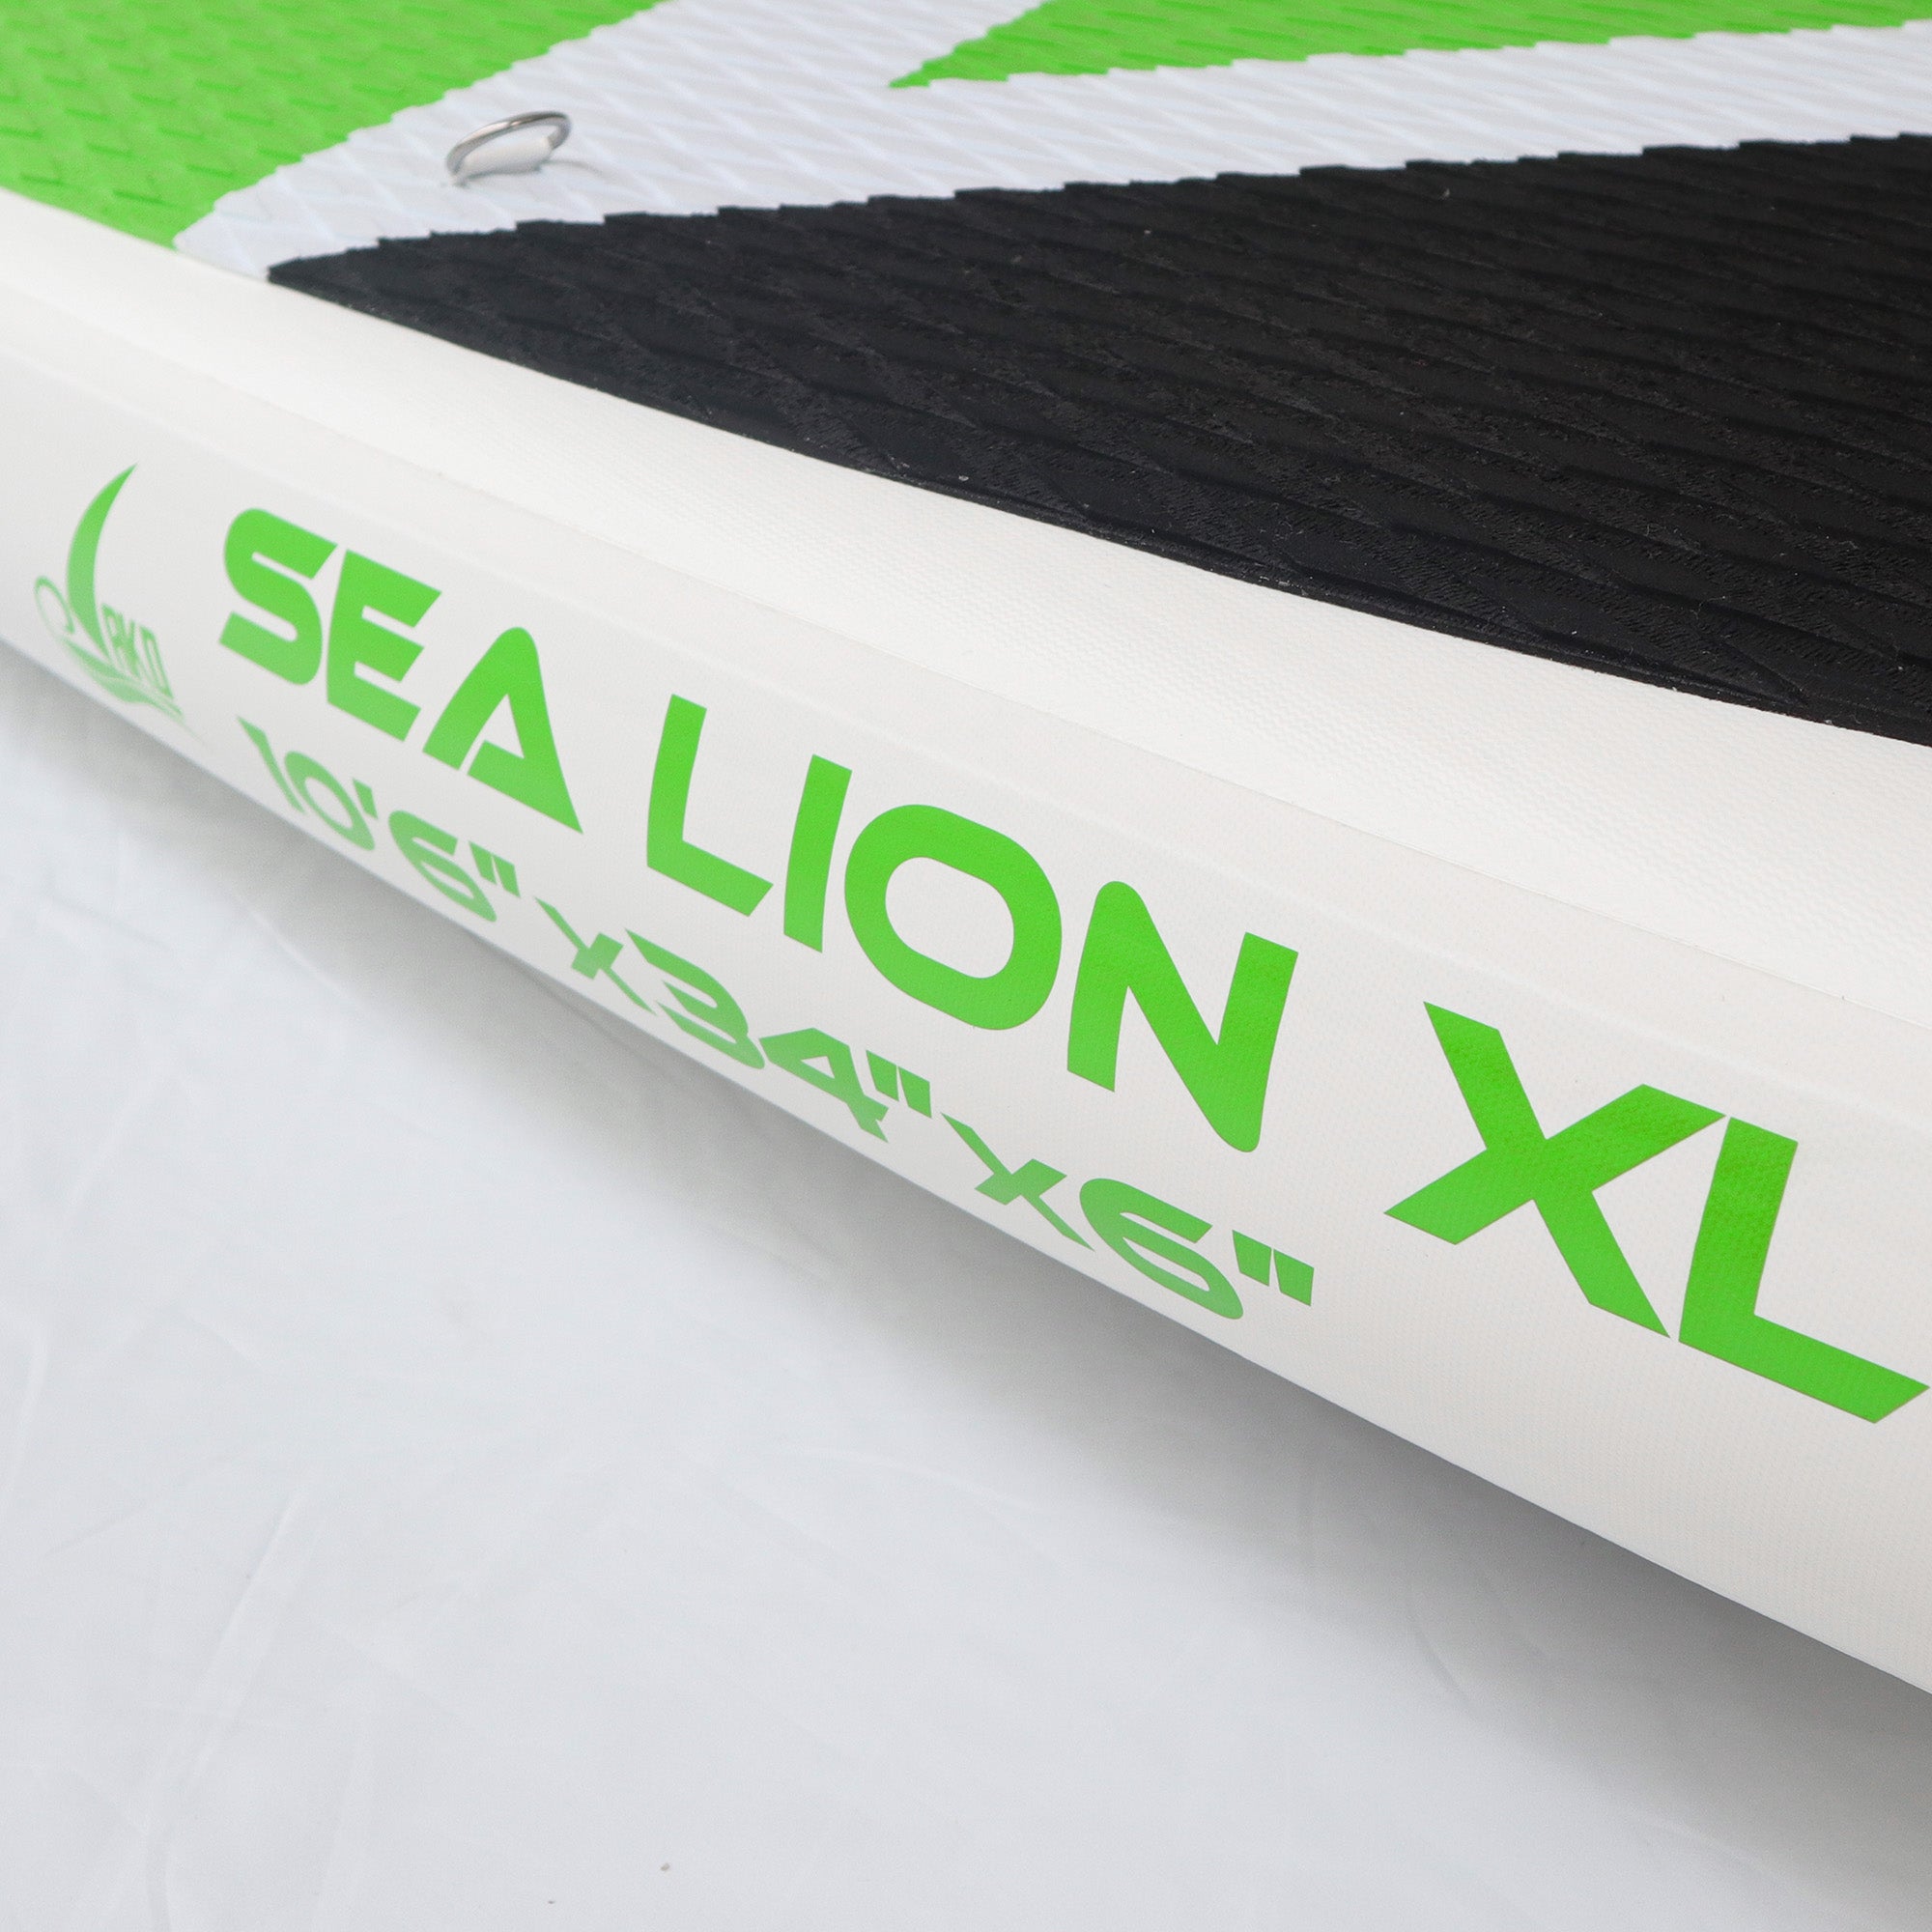 AKD SeaLion 10'6 "XL Stand Up Paddle Board SUP 320x86x15cm 160kg / 337L (Vert)